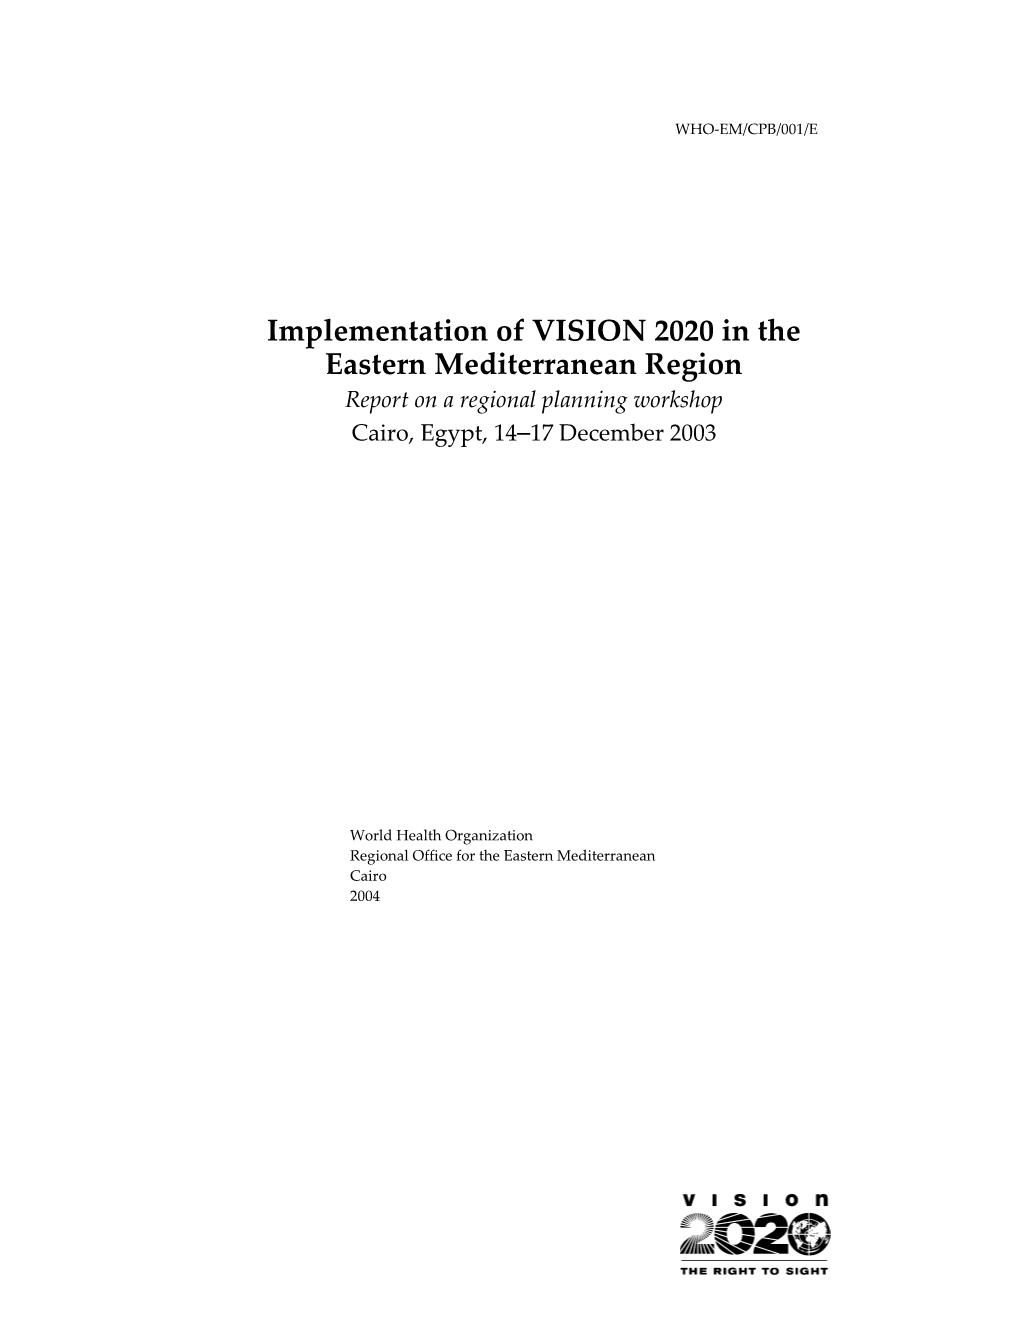 Implementation of VISION 2020 in the Eastern Mediterranean Region Report on a Regional Planning Workshop Cairo, Egypt, 14 –17 December 2003